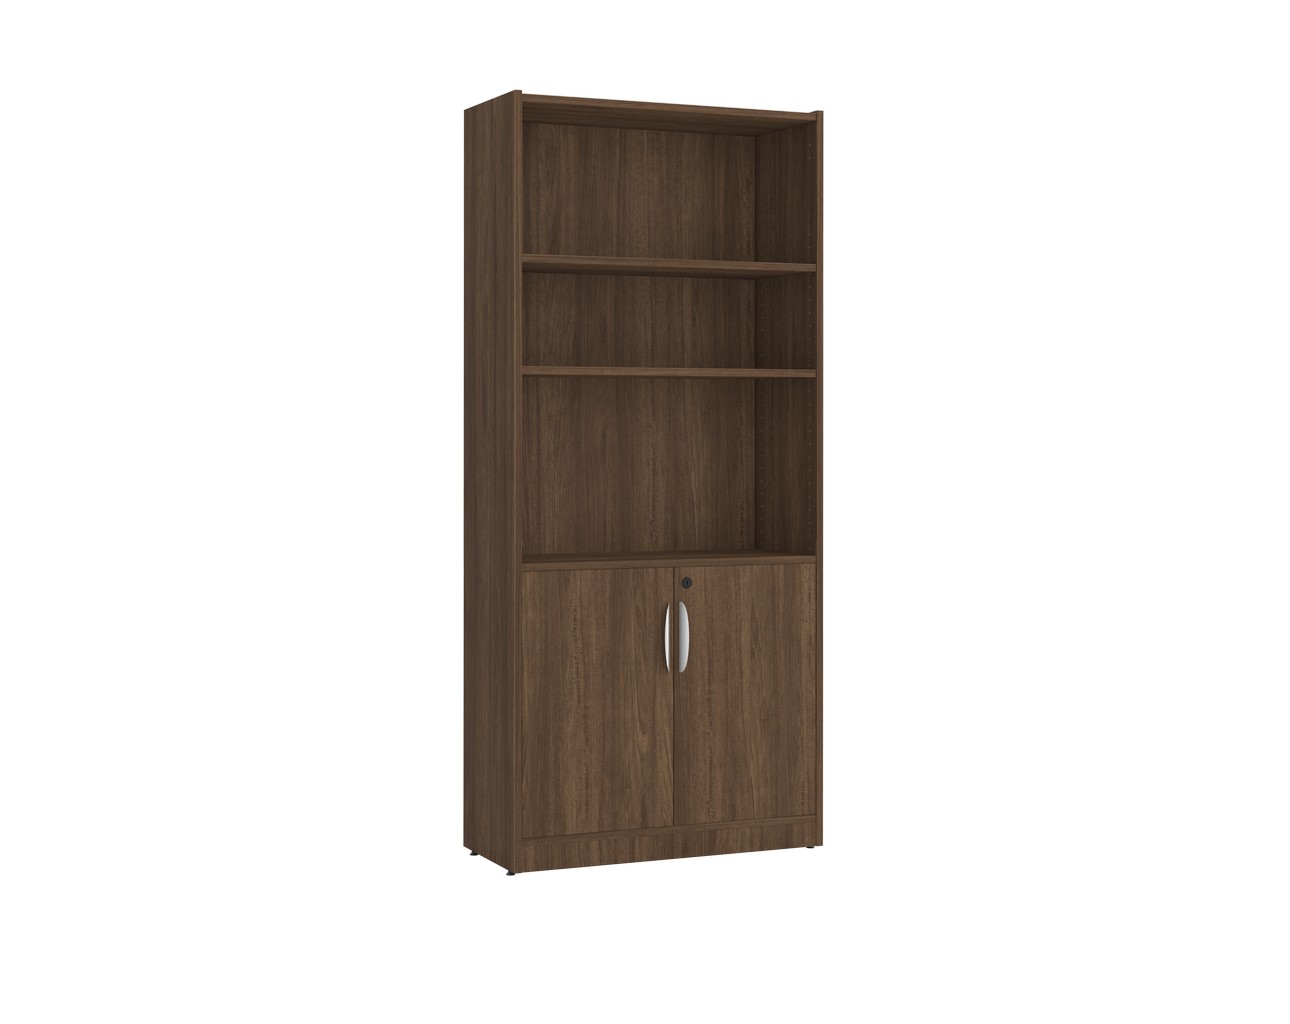 6 Shelf Heavy Duty Bookcase with Modern Walnut Finish and Locking Doors